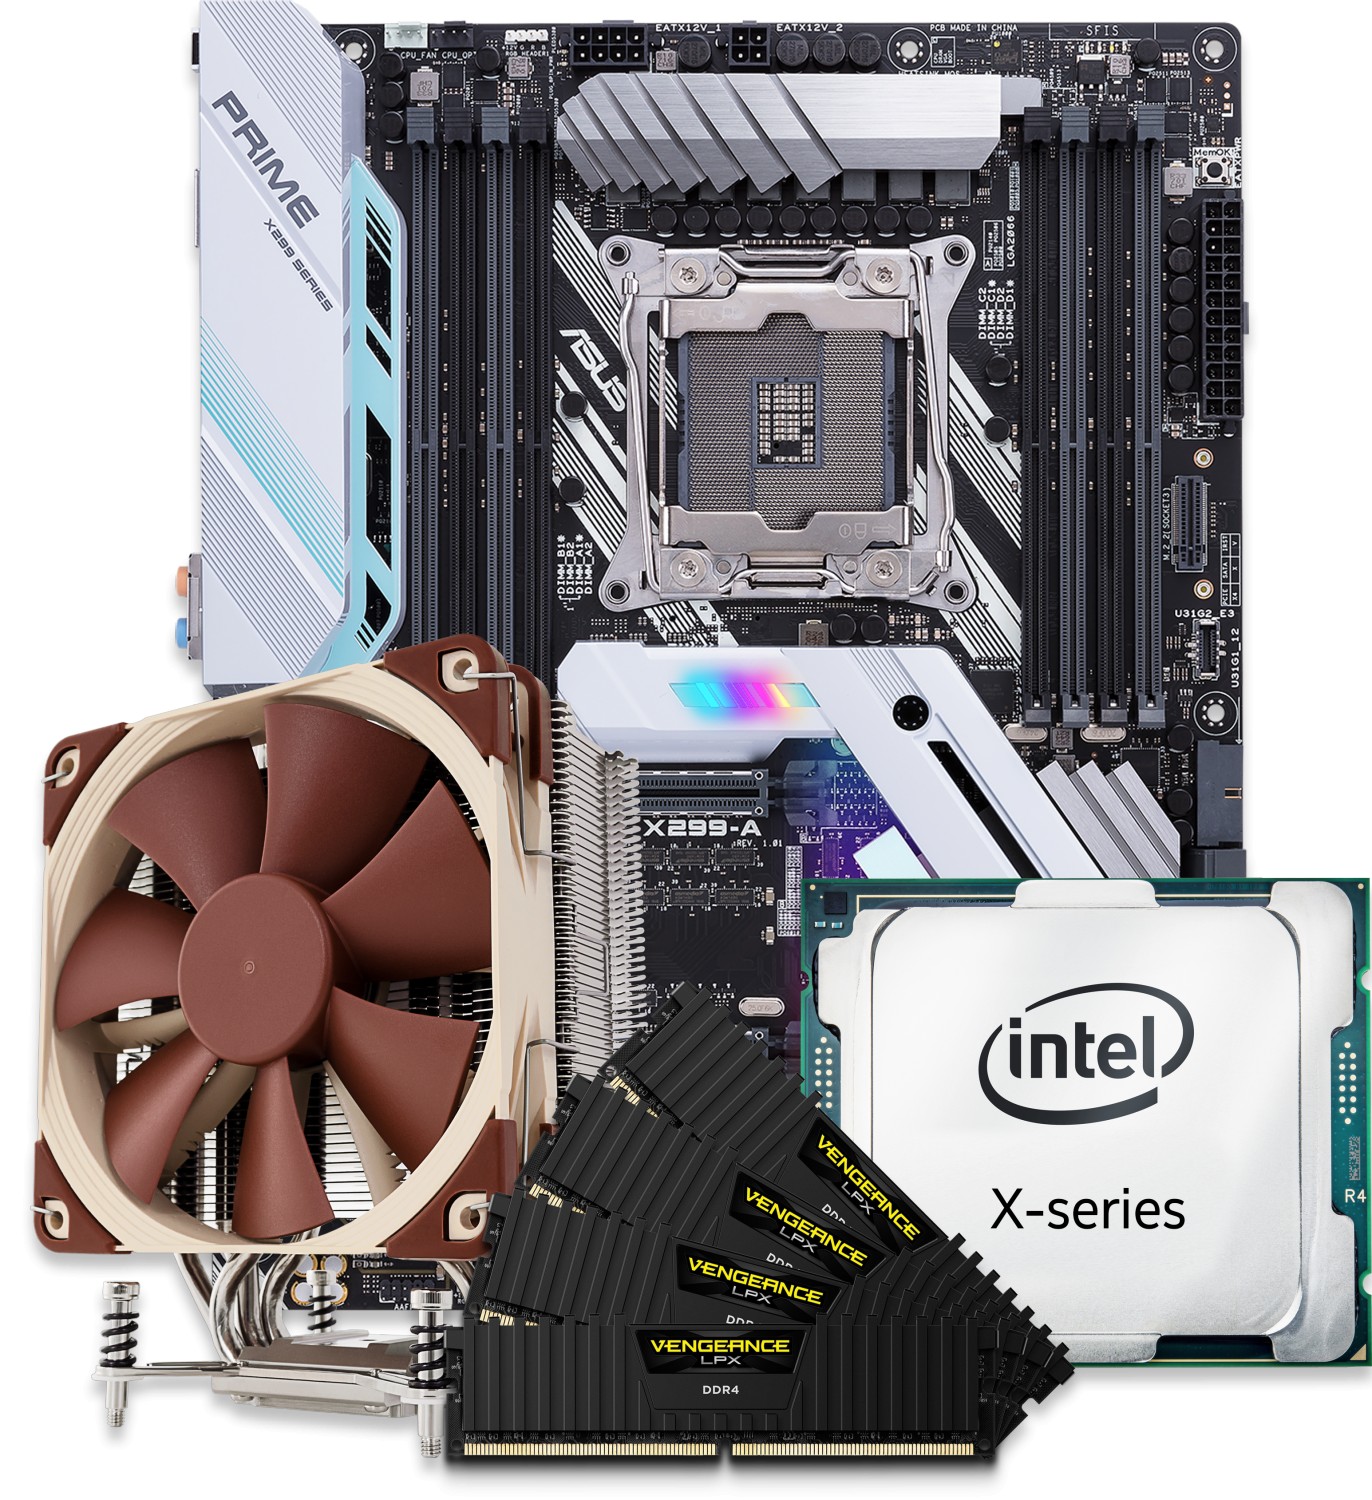 Intel X-series CPU and ATX Motherboard Bundle